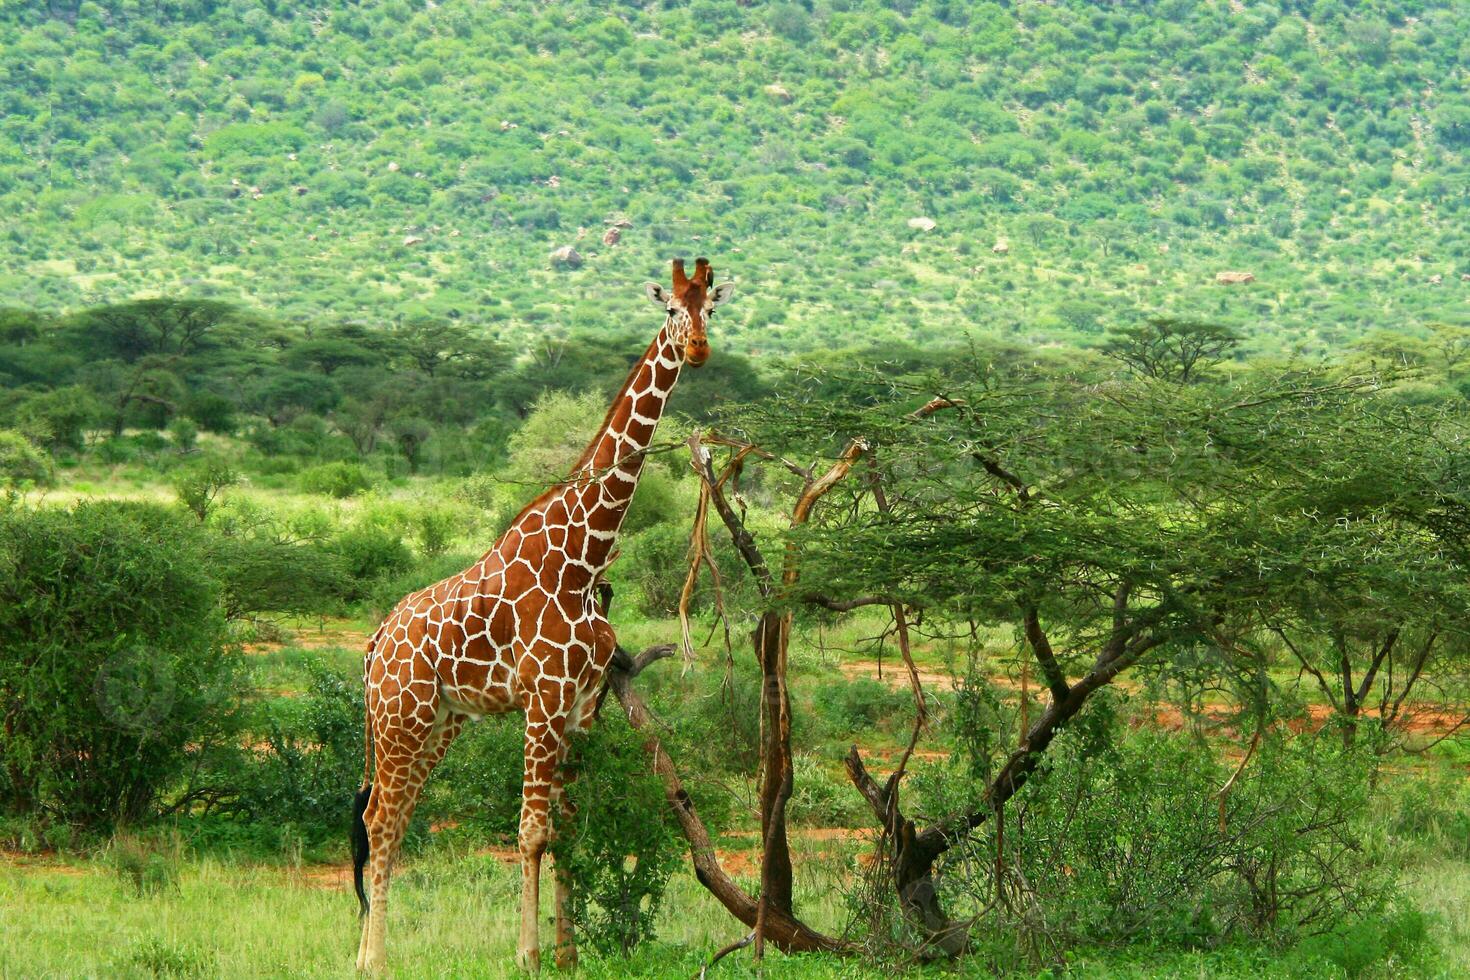 Giraffe in the wild photo